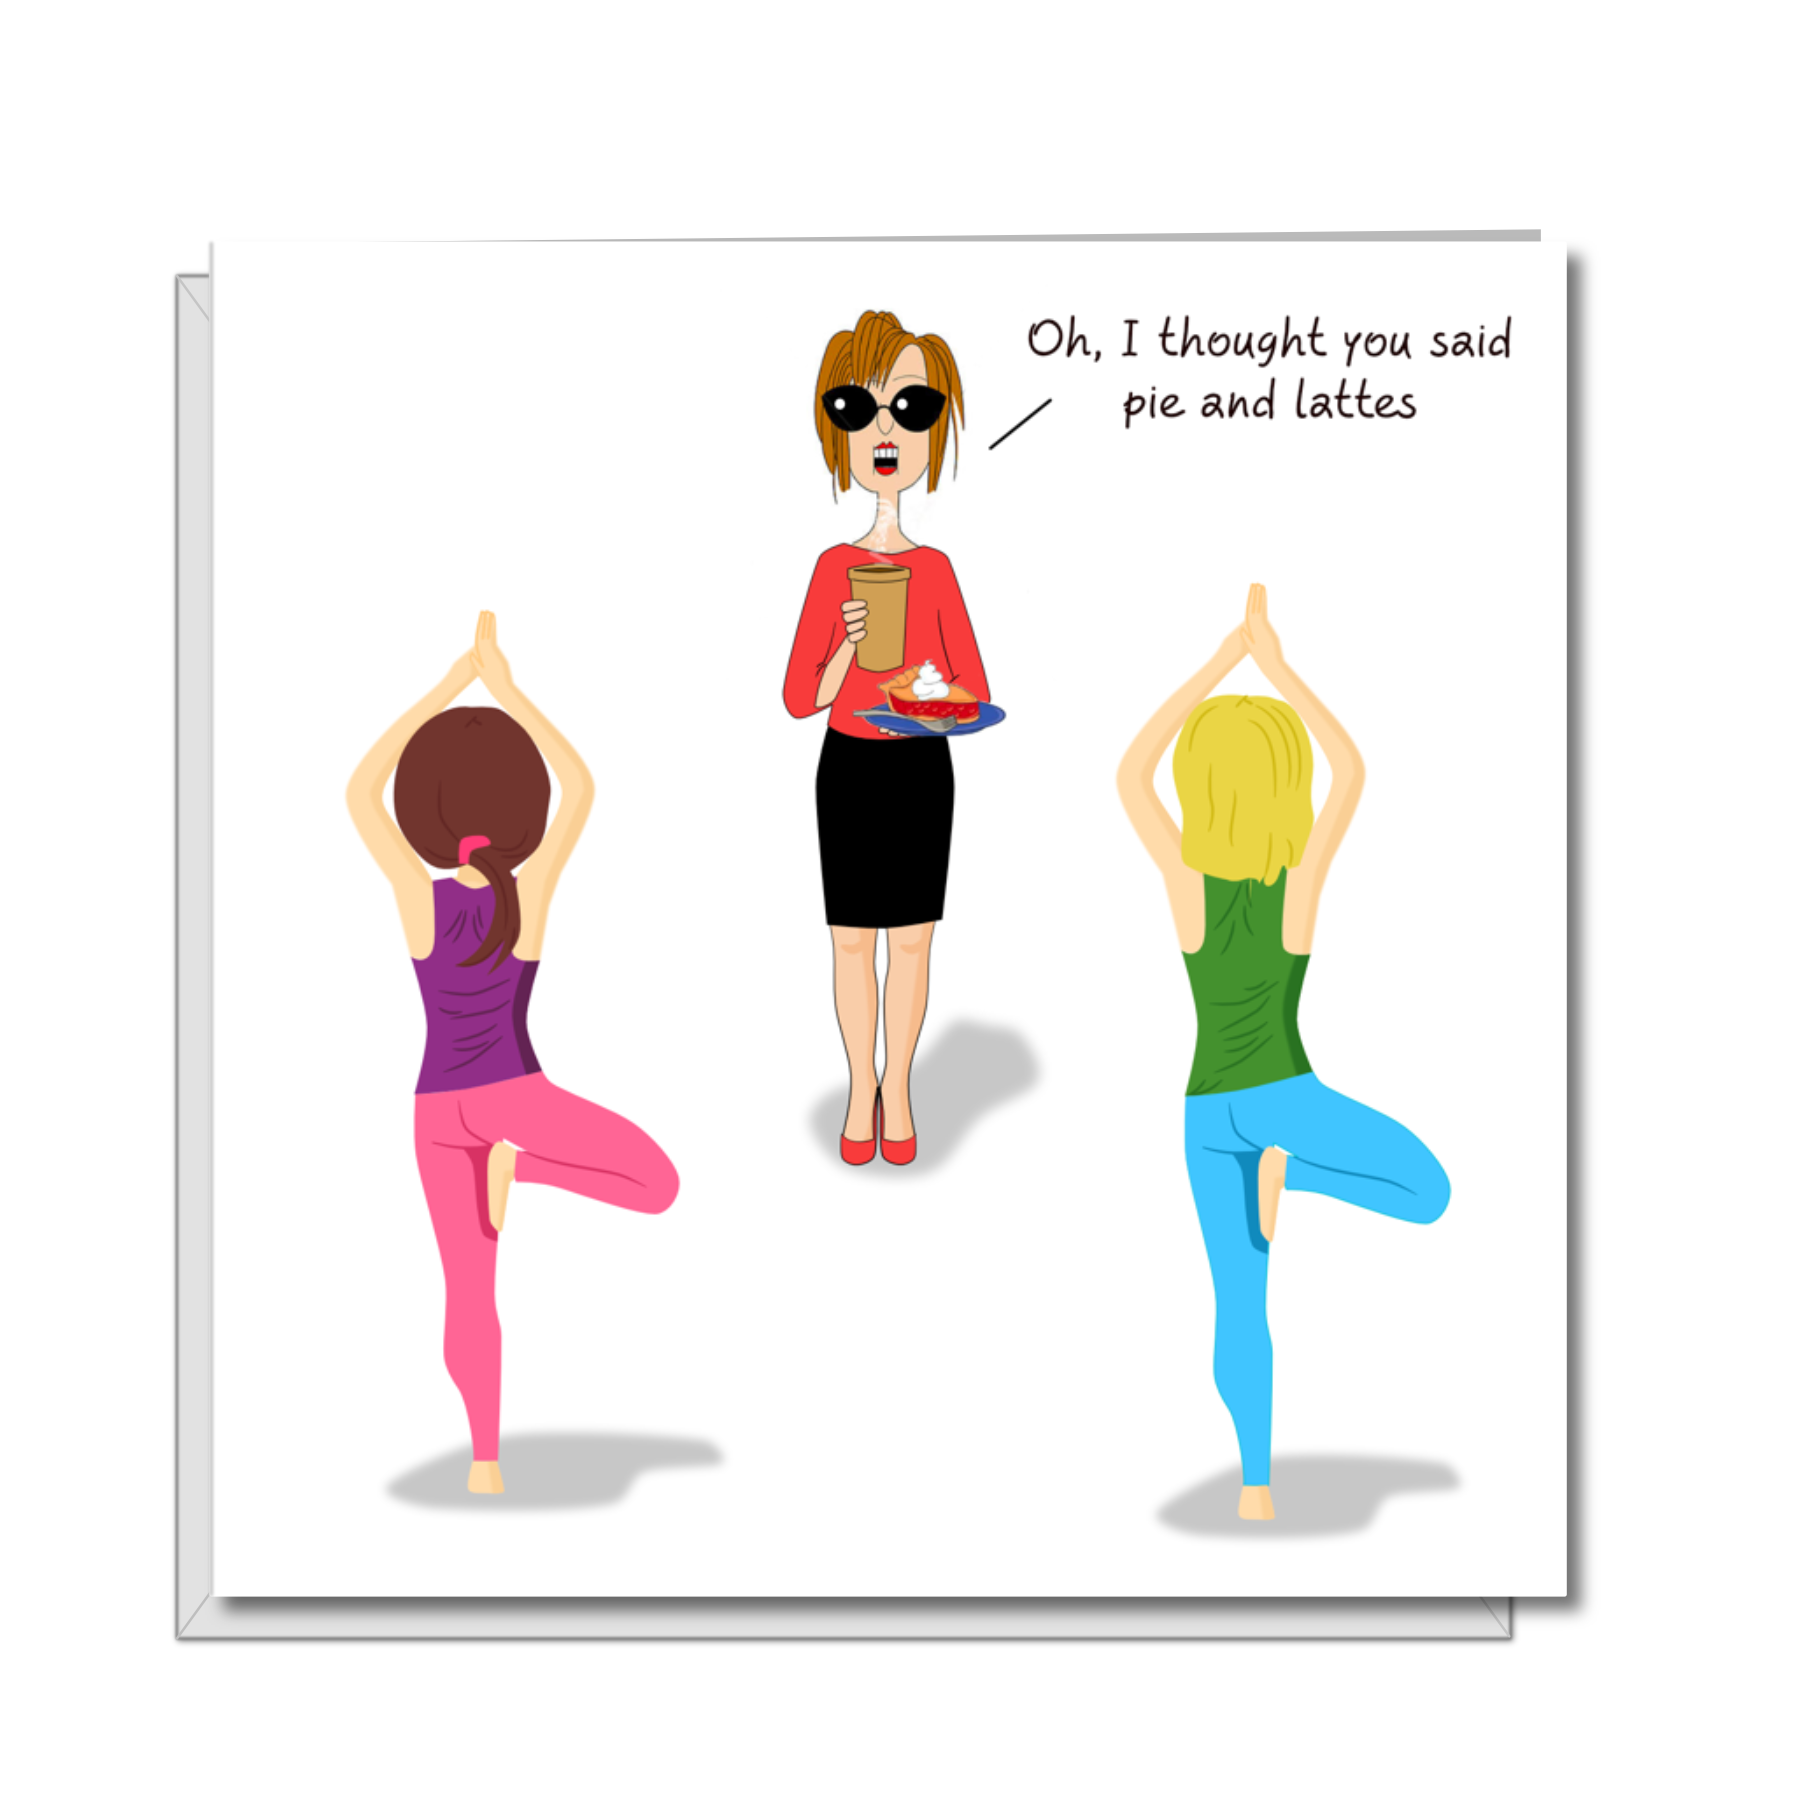 Funny yoga birthday card